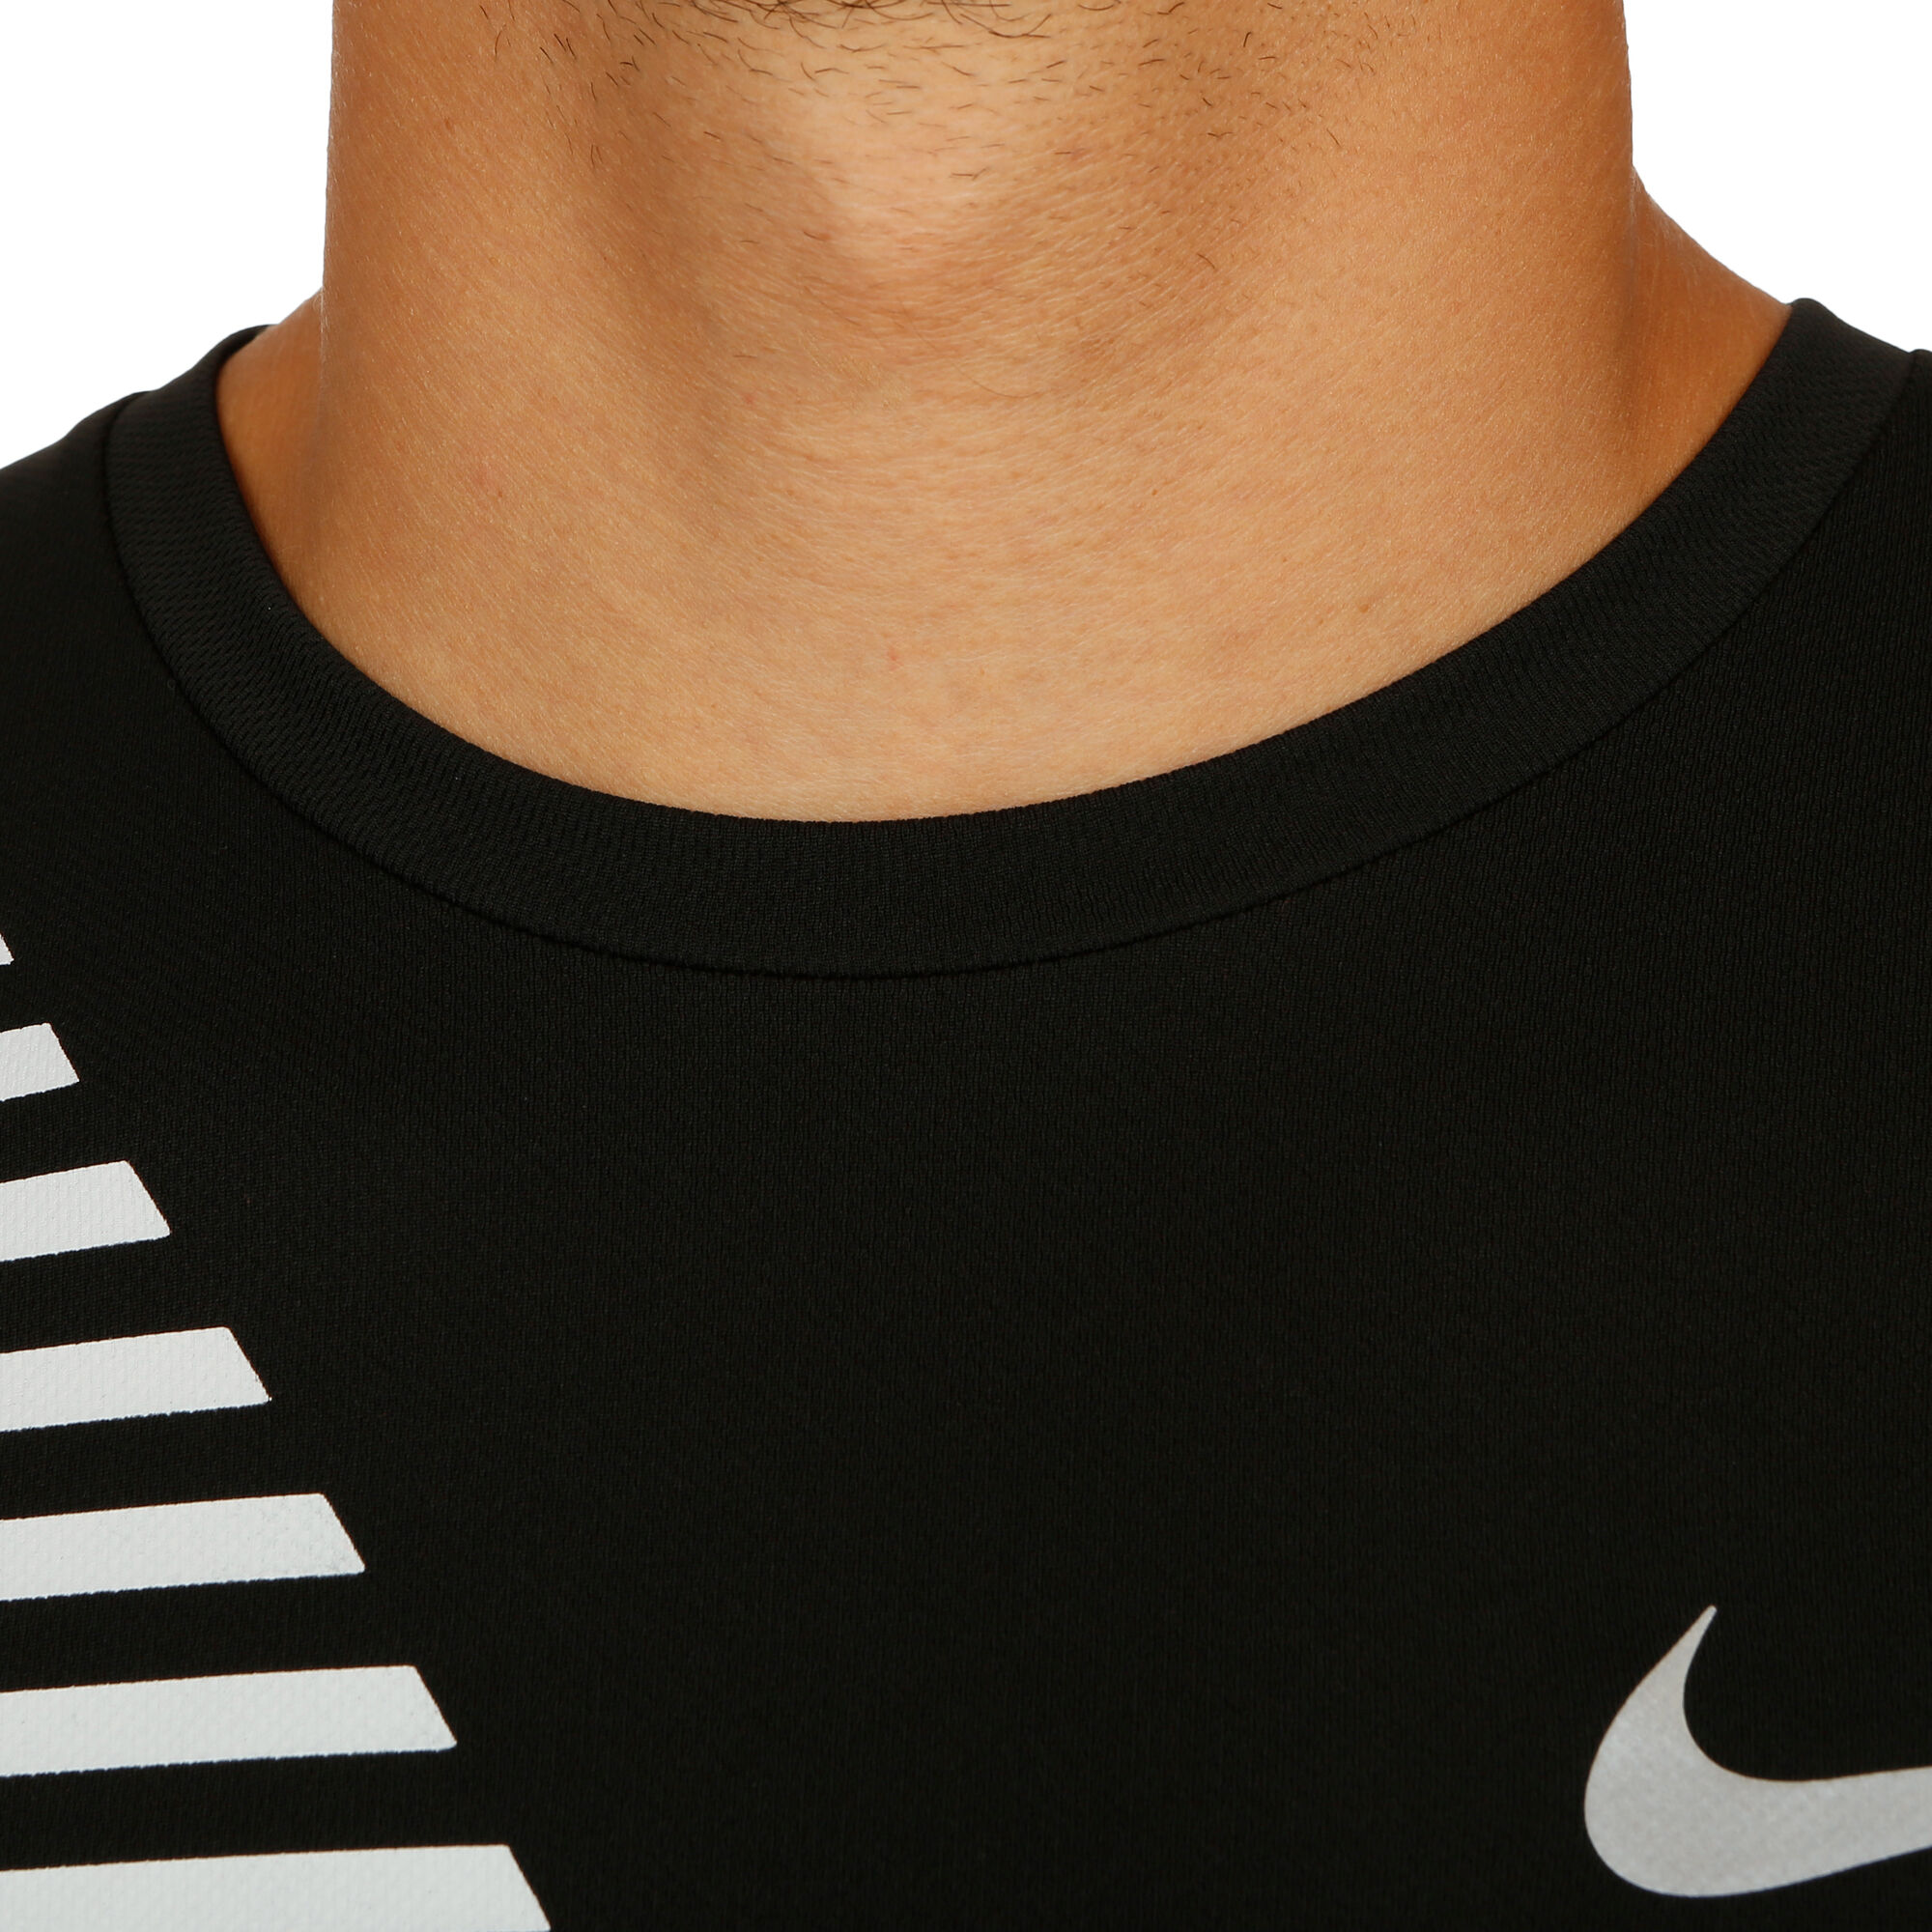 Nike Breathe Rapid Camiseta De Manga Corta Hombres - Blanco compra | Padel-Point